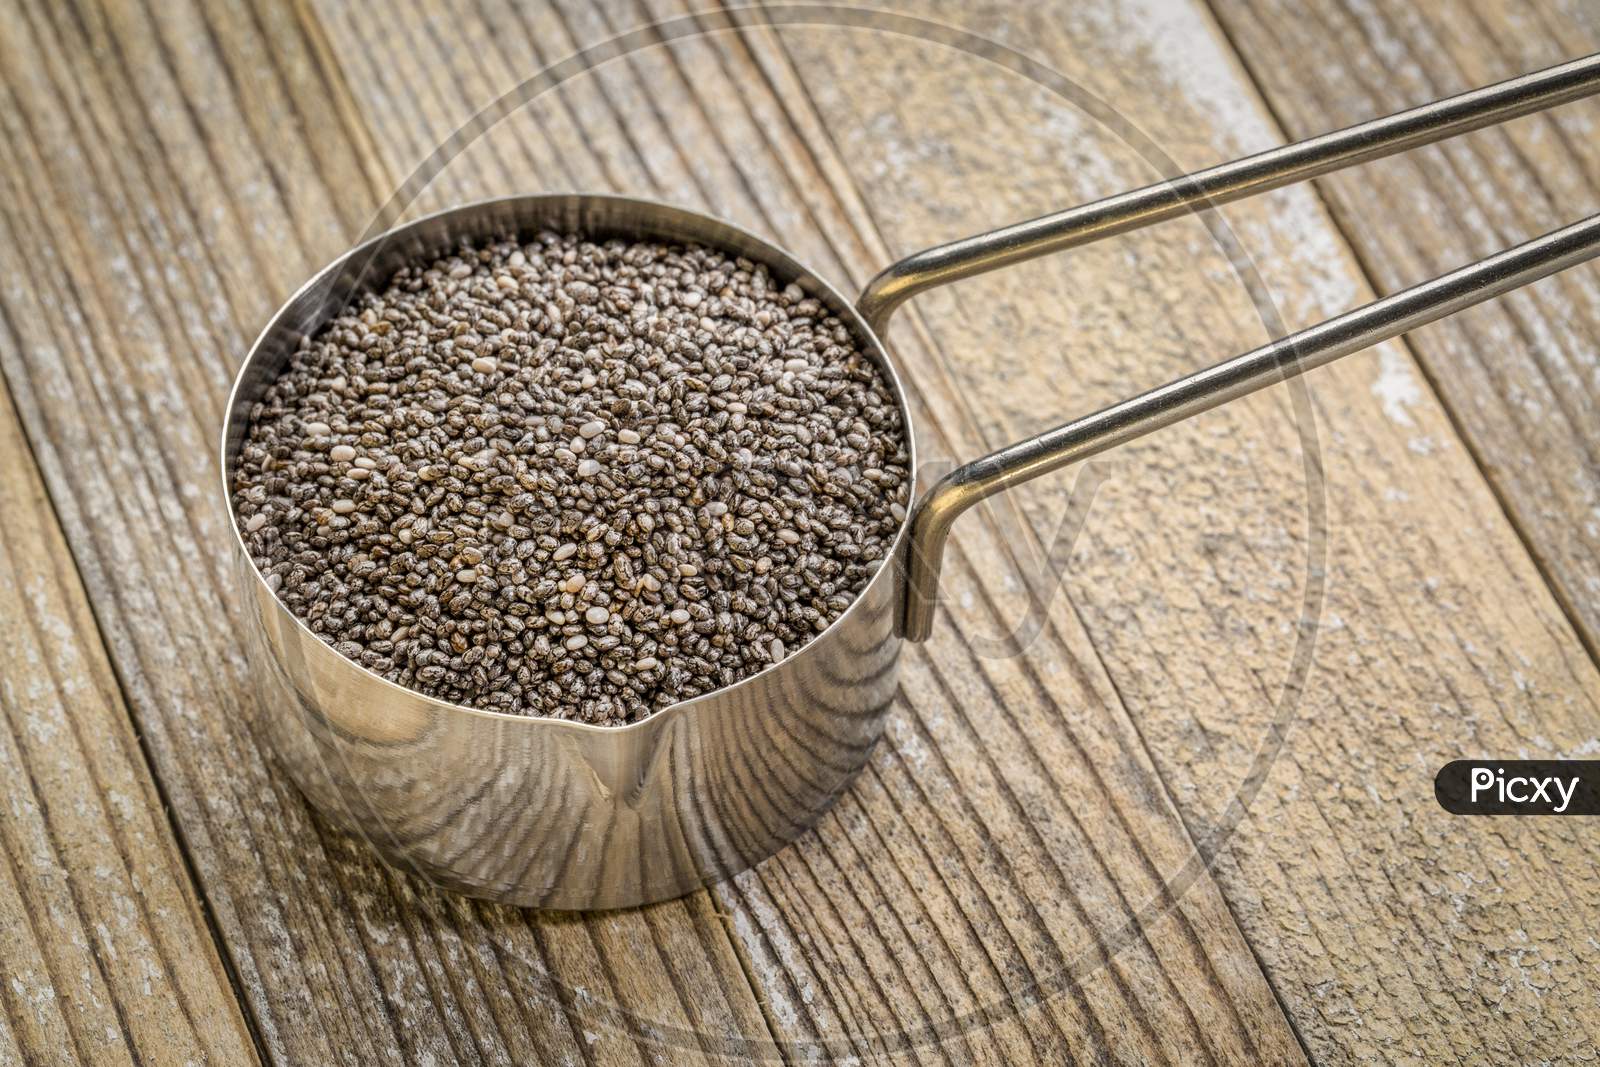 Chia Seeds In Metal Measuring Scoop Against Grunge Wood Background, Healthy Superfood Concept